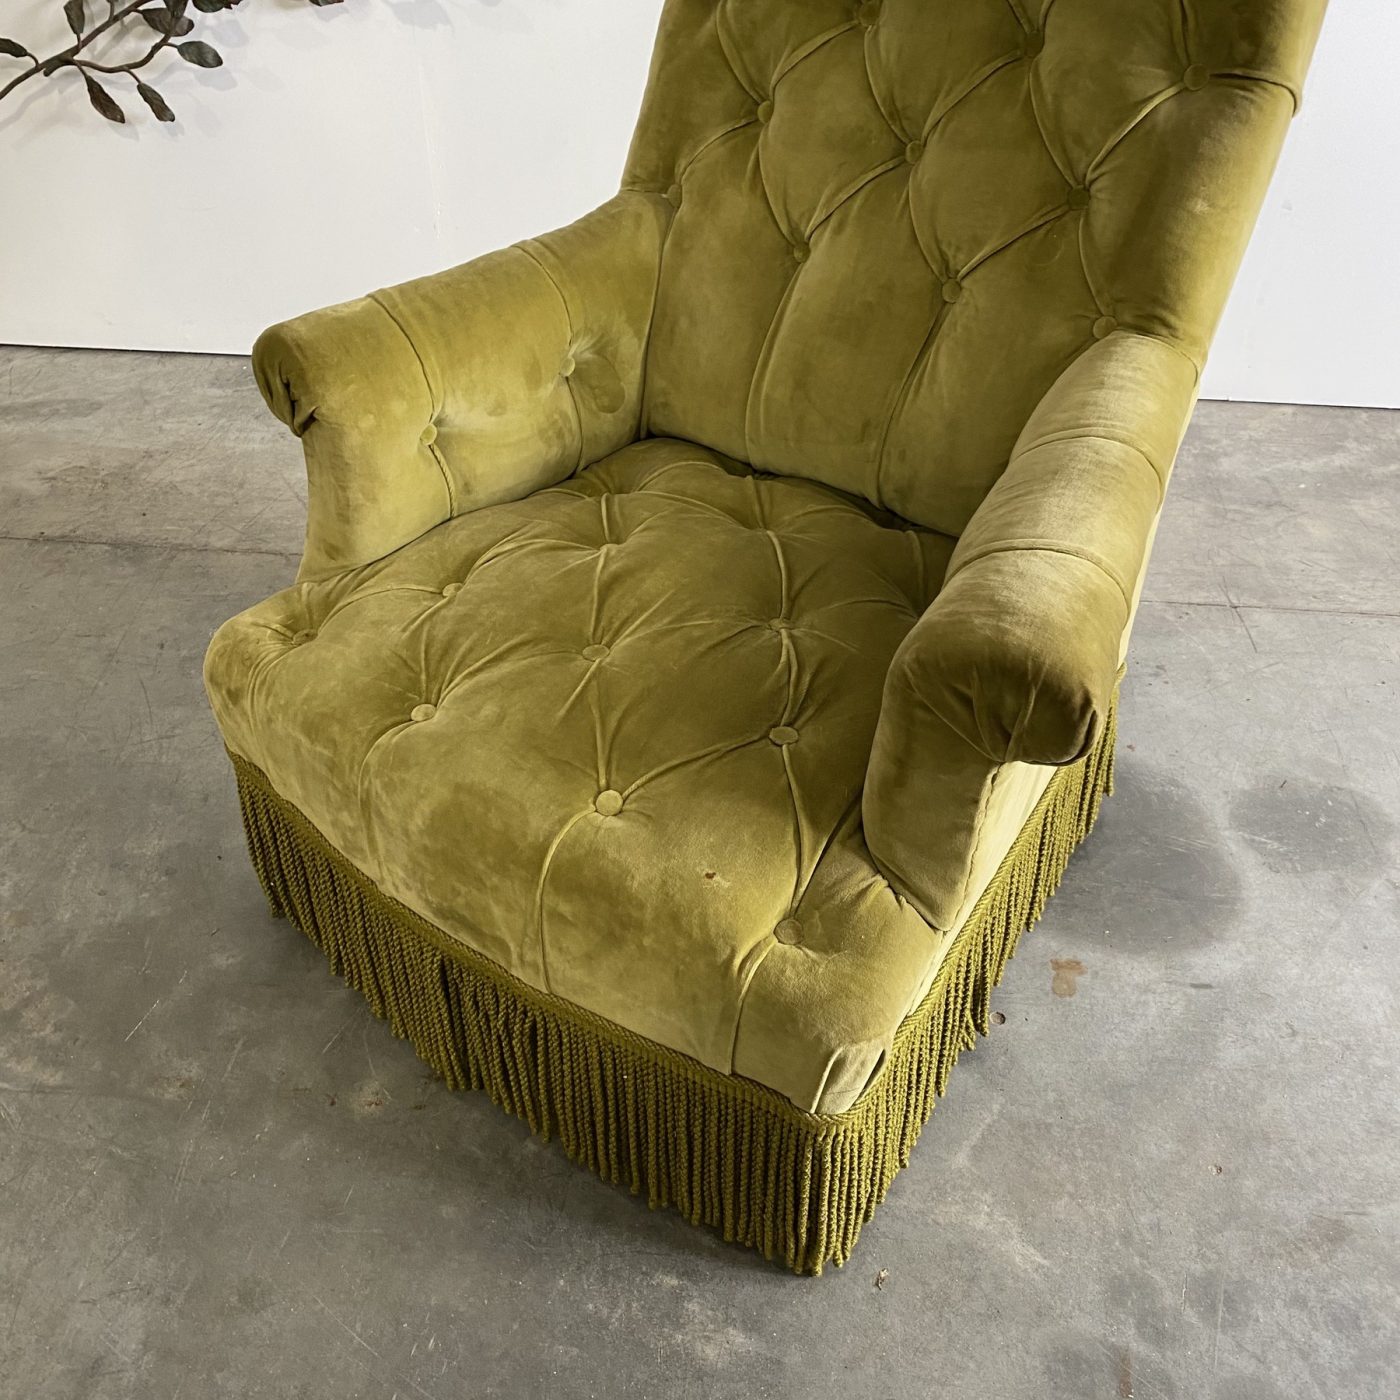 objet-vagabond-napoleon3-chairs0003